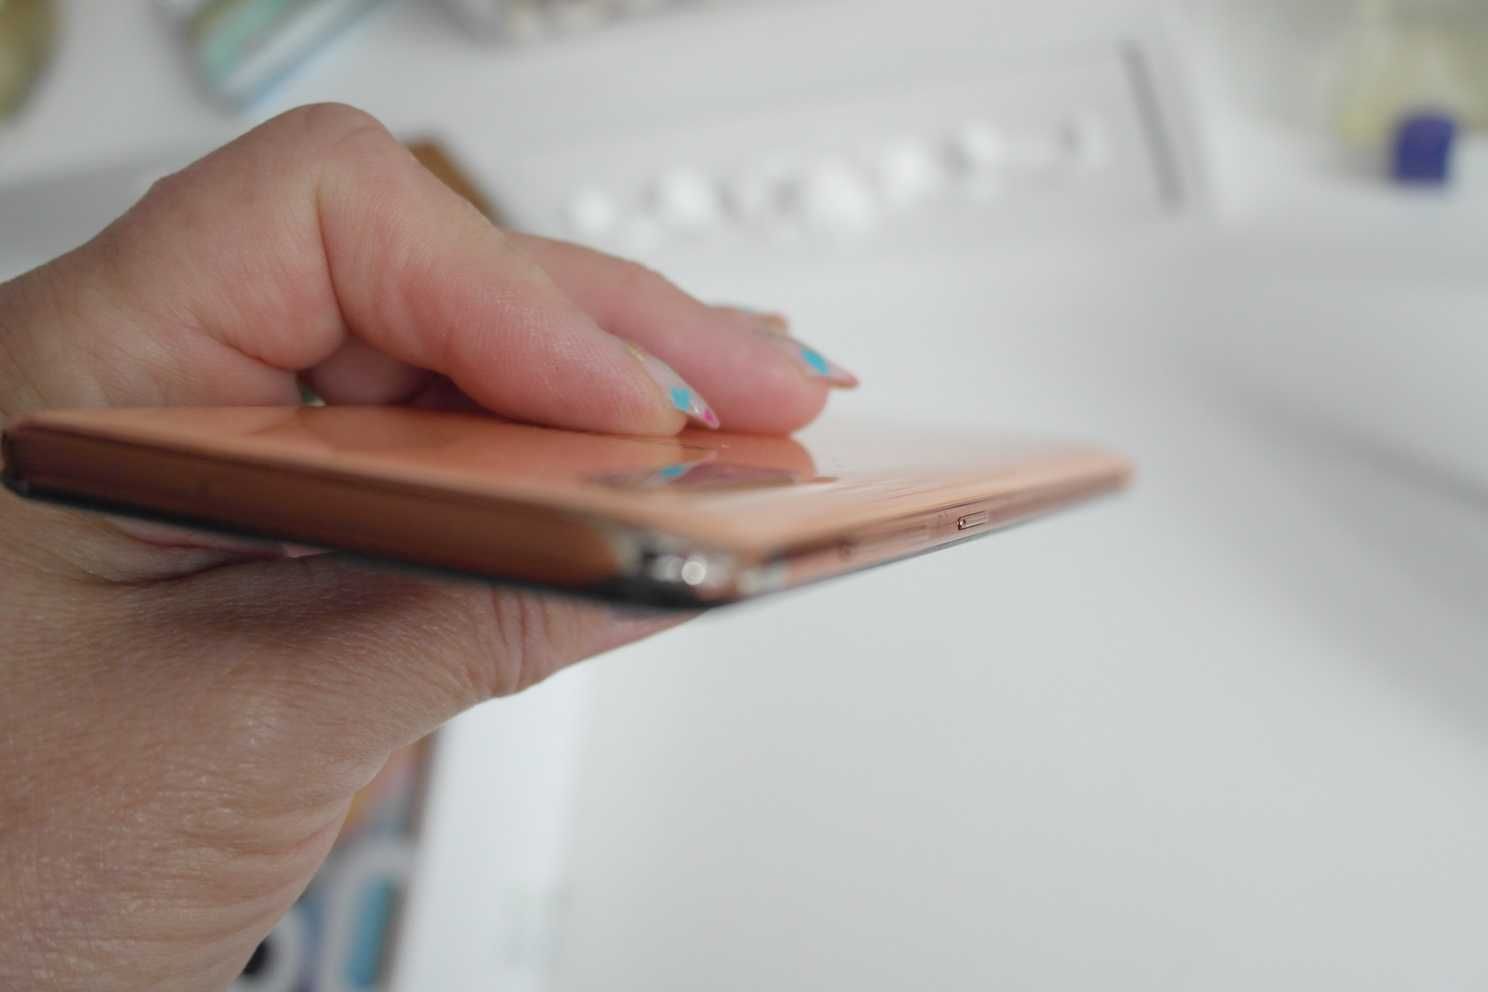 Smartfon Samsung Galaxy A50 kolor łososiowy